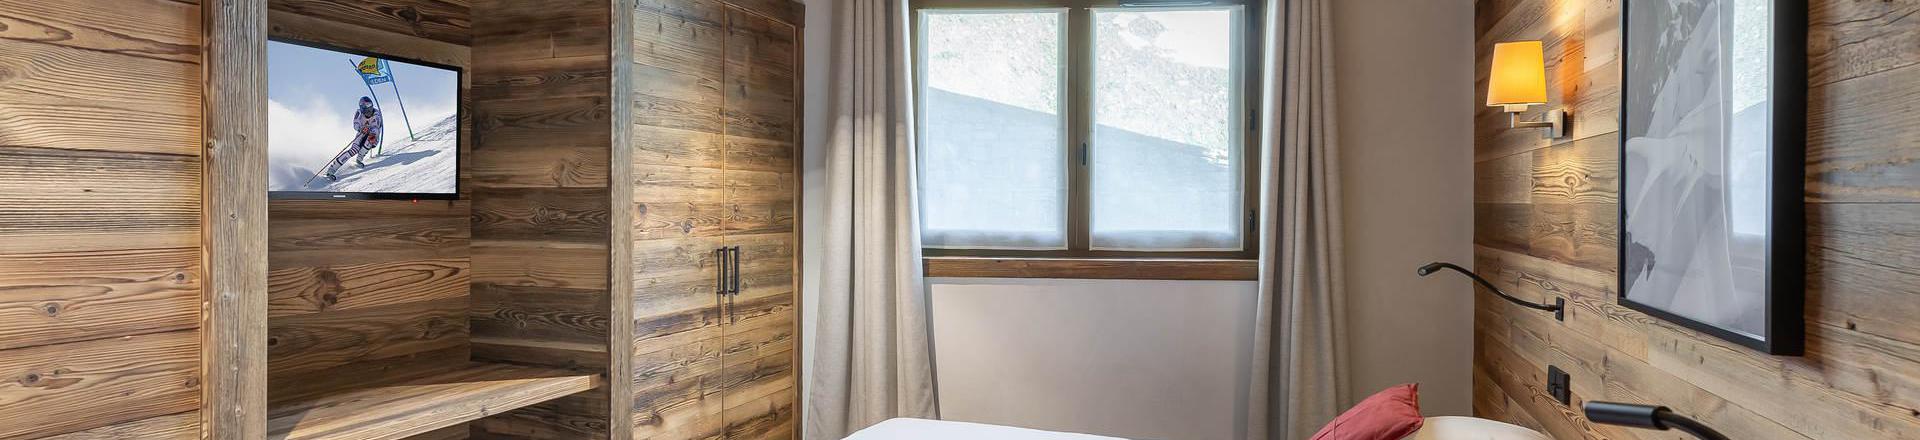 Rent in ski resort 5 room apartment 10 people (5) - Chalet les Flocons - Méribel - Apartment